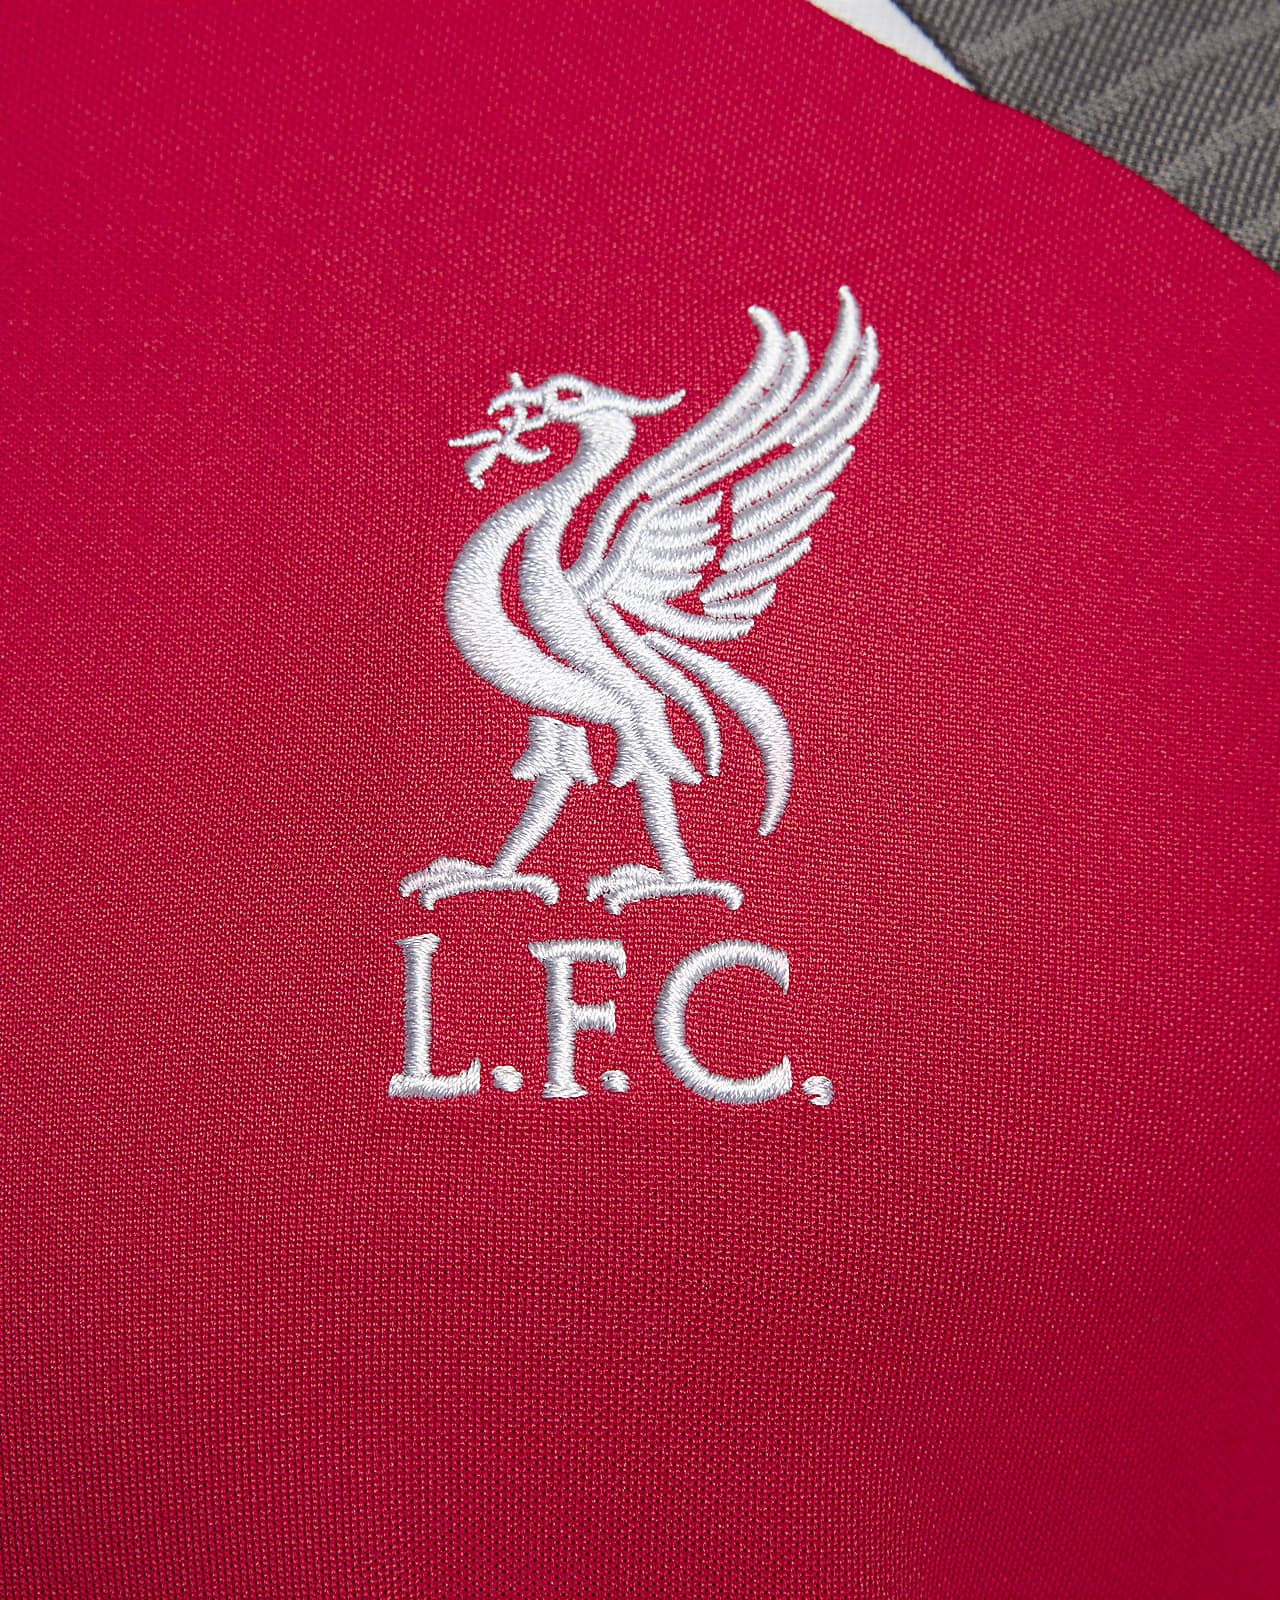 Liverpool FC Strike Men's Nike Dri-FIT Soccer Knit Top